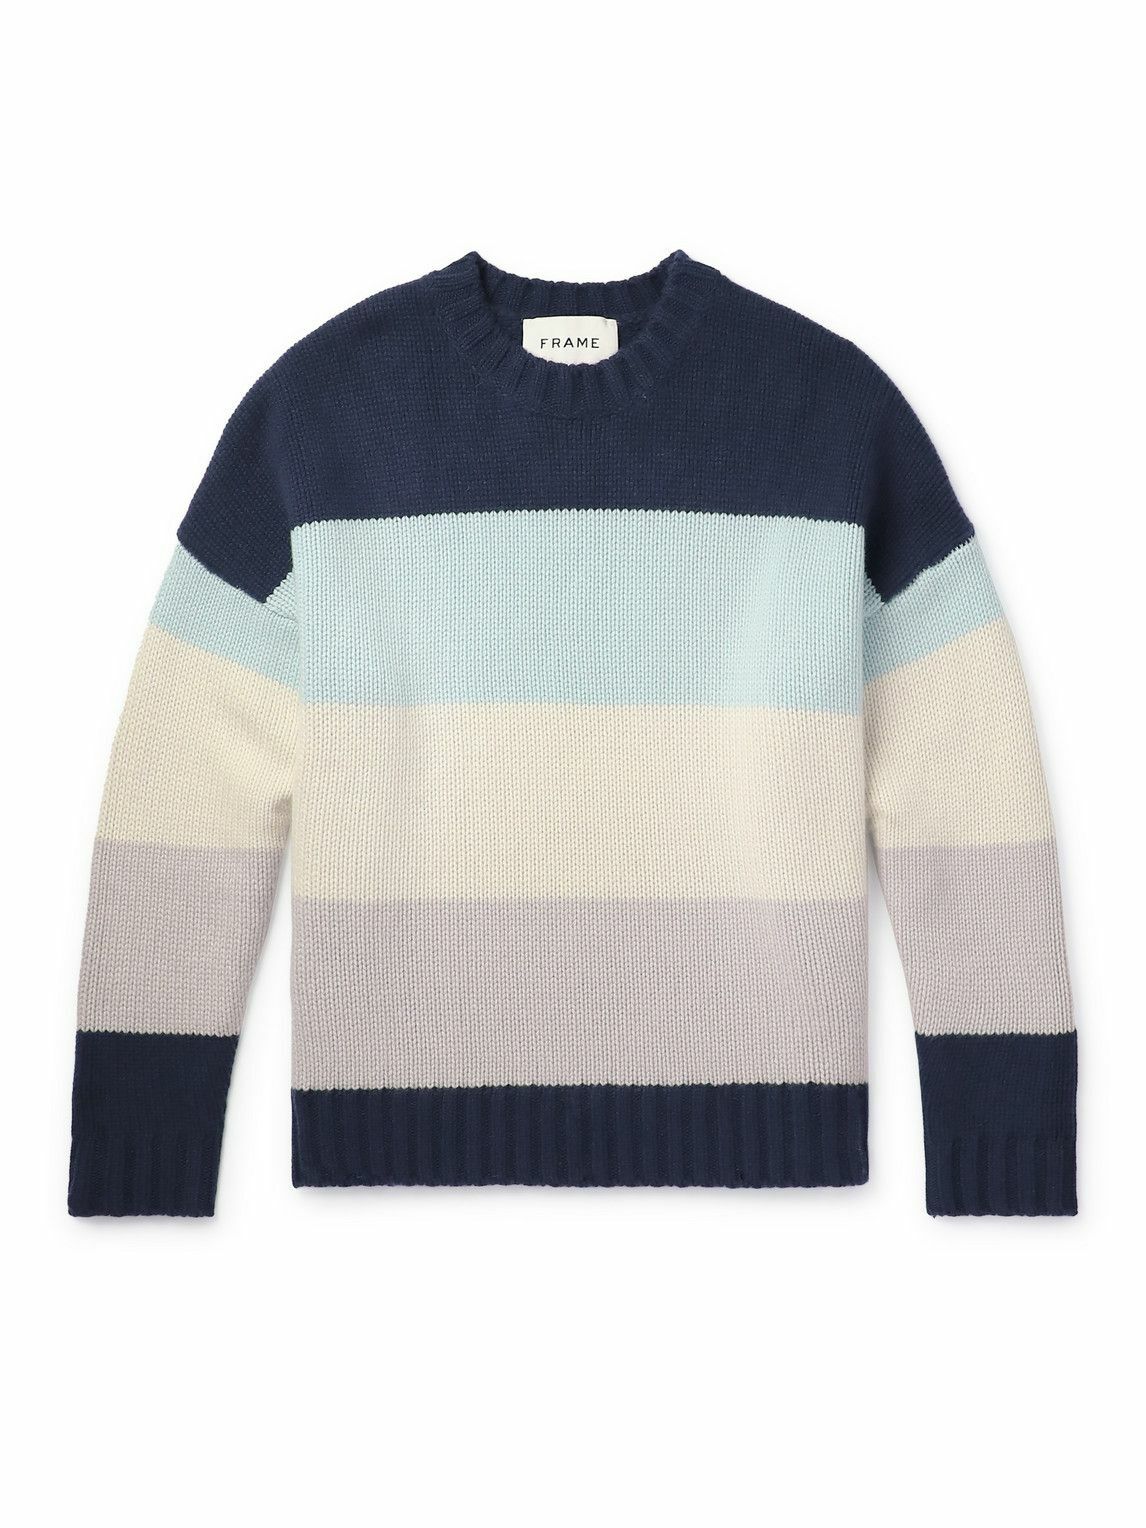 FRAME - Striped Ribbed Cashmere Sweater - Multi Frame Denim